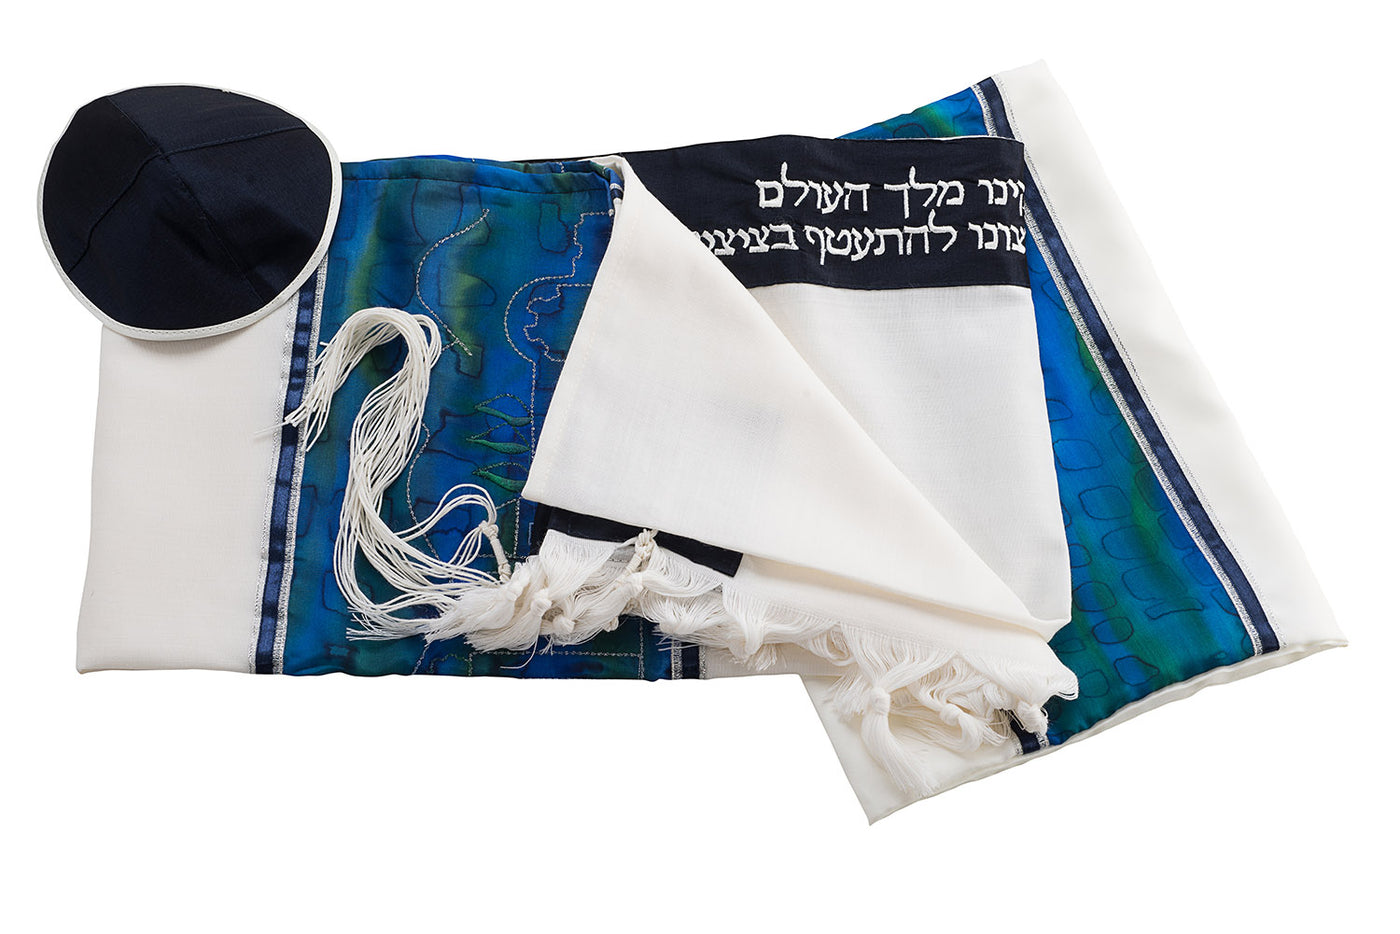 Wool tallit set with Gold embroidered Jerusalem landscape, Bar Mitzvah Tallit set, custom tallit from Israel by Galilee Silks